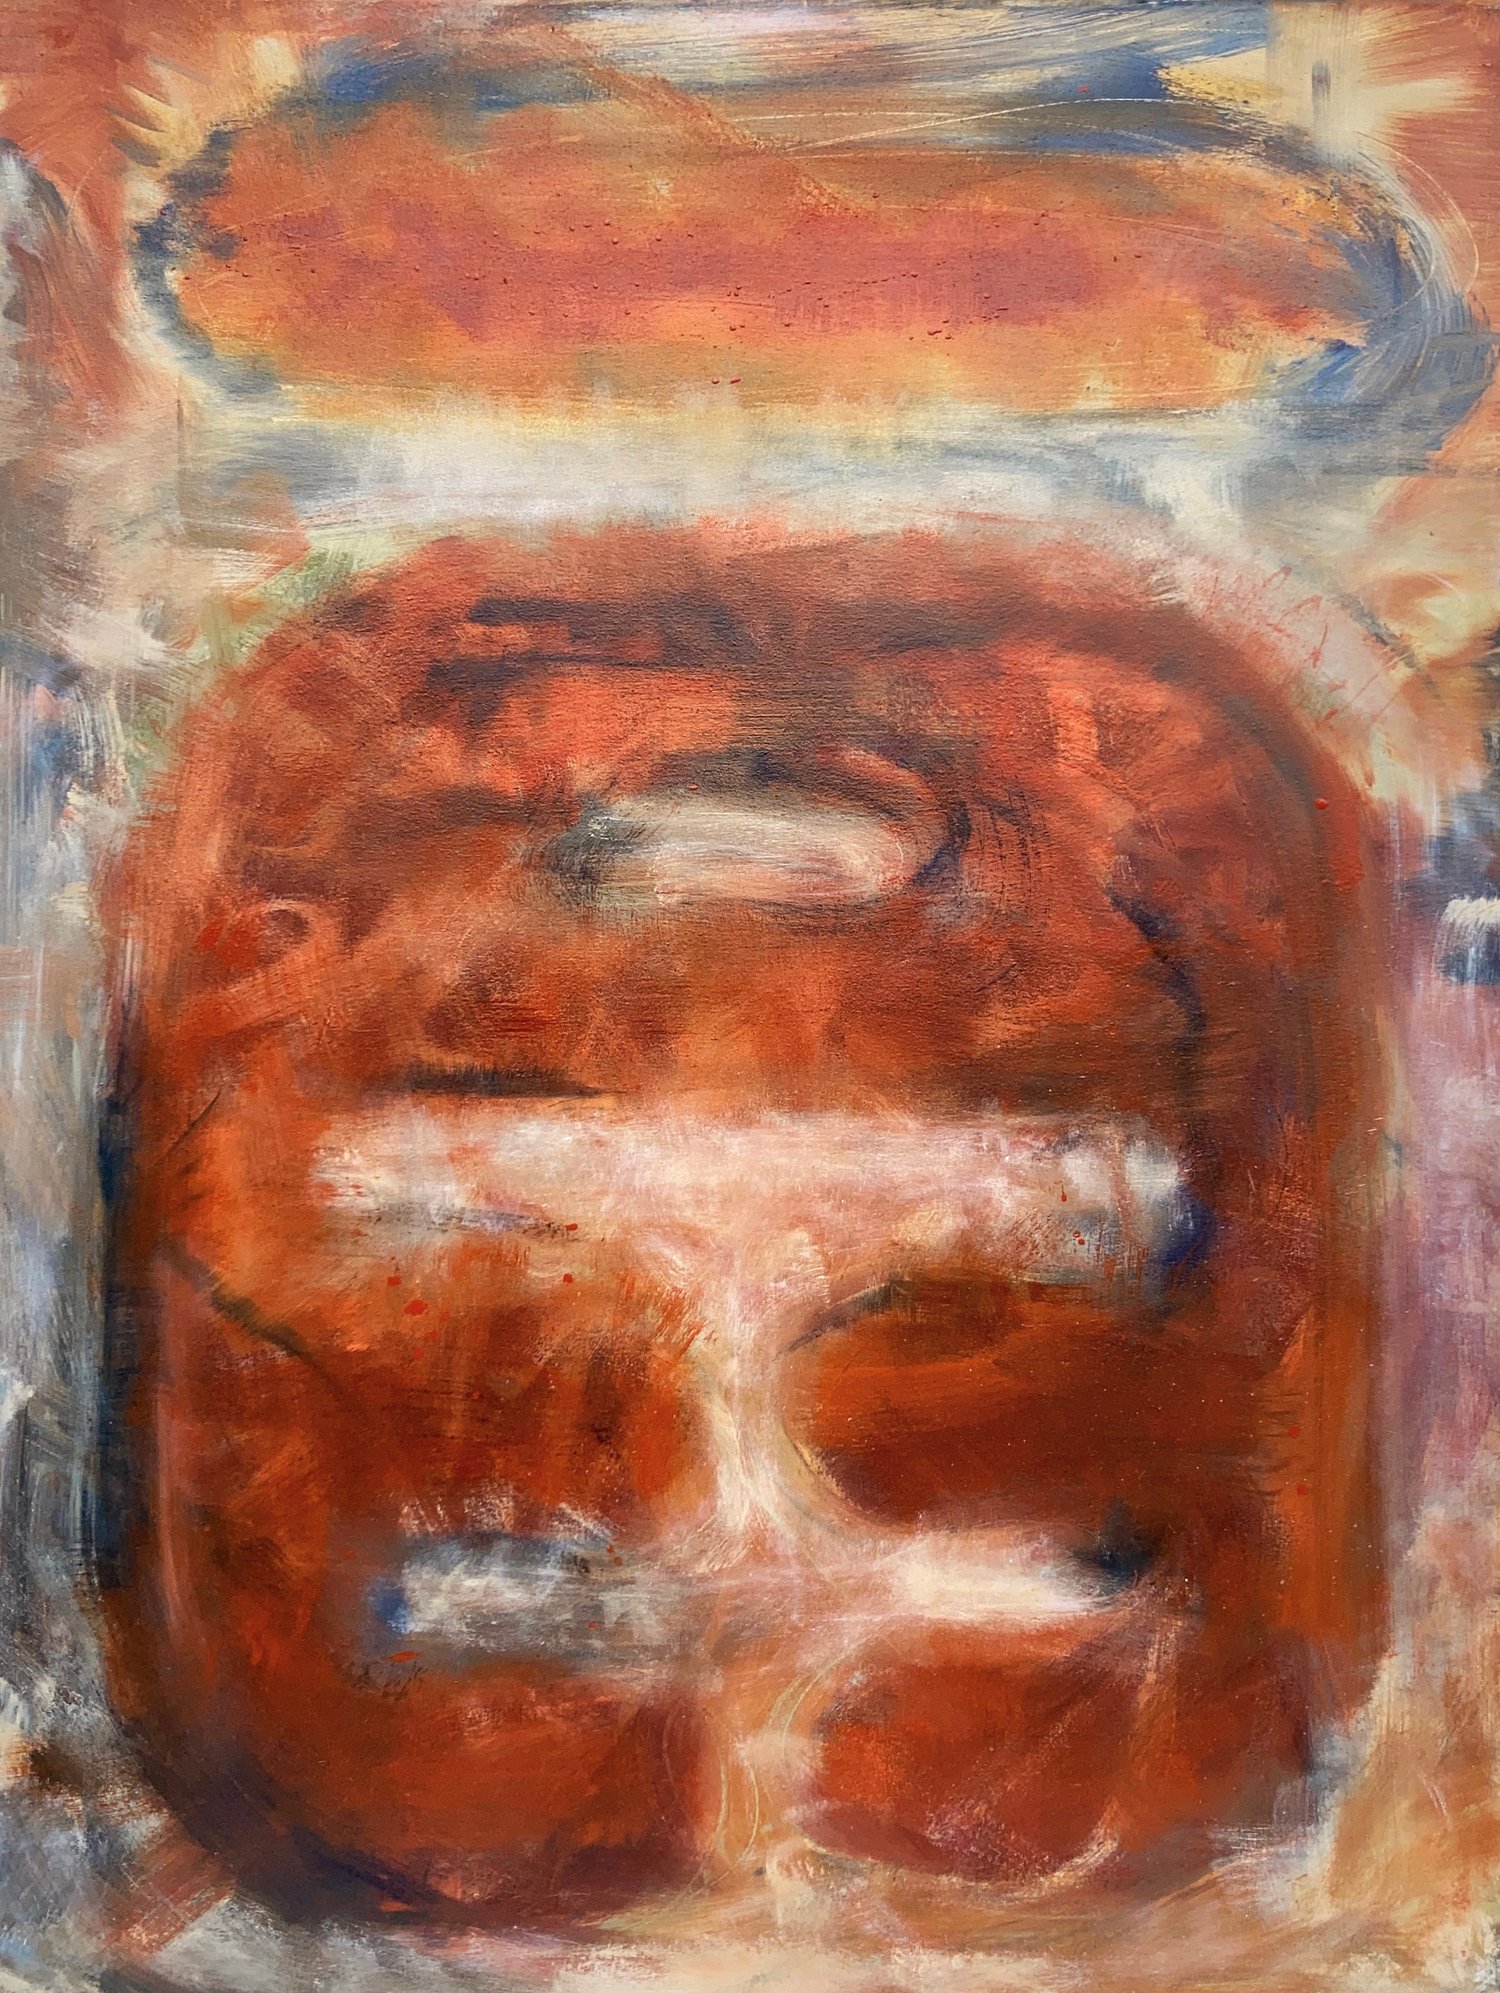 Oil on Canvas 30x40” (76x102cm)